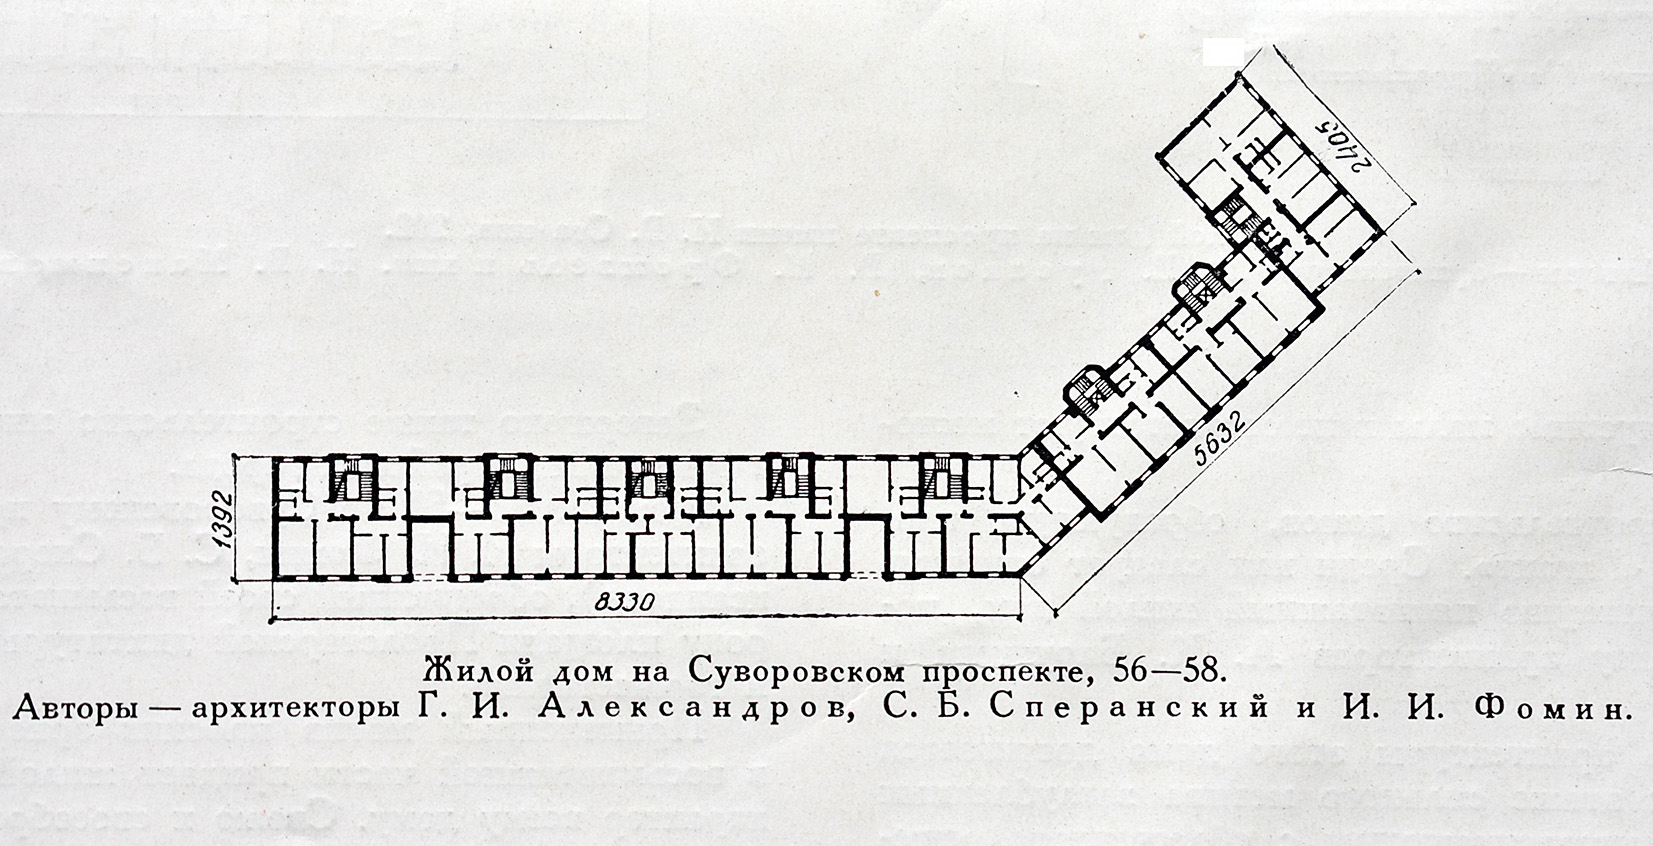 Saint Petersburg, Суворовский проспект, 56. Saint Petersburg — Drawings and Plans